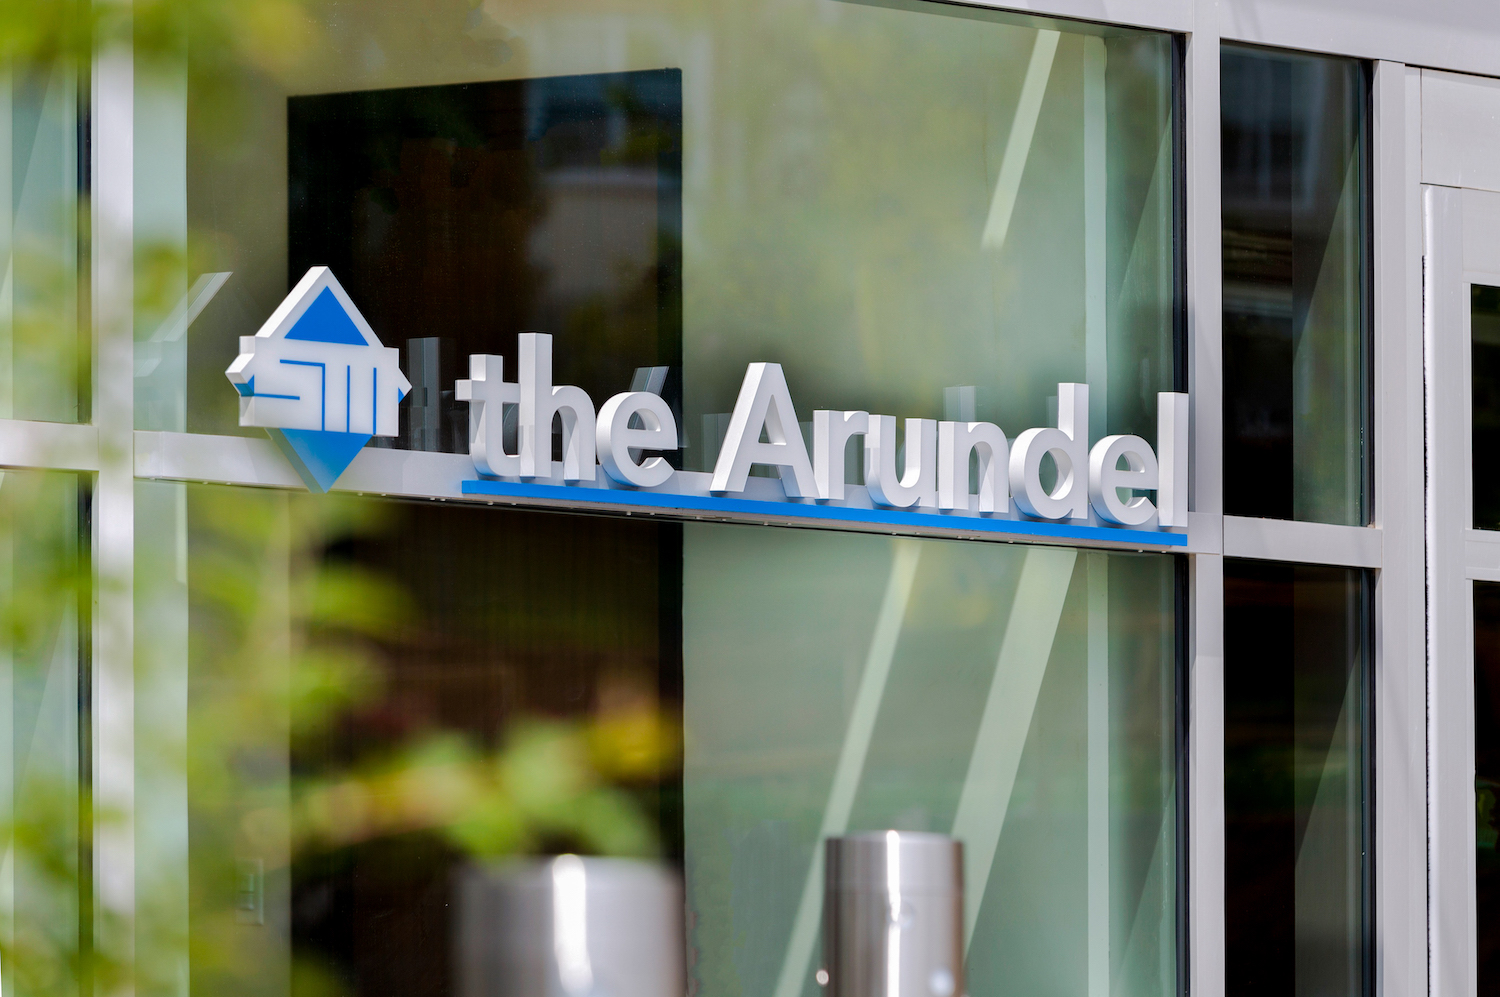 The Arundel